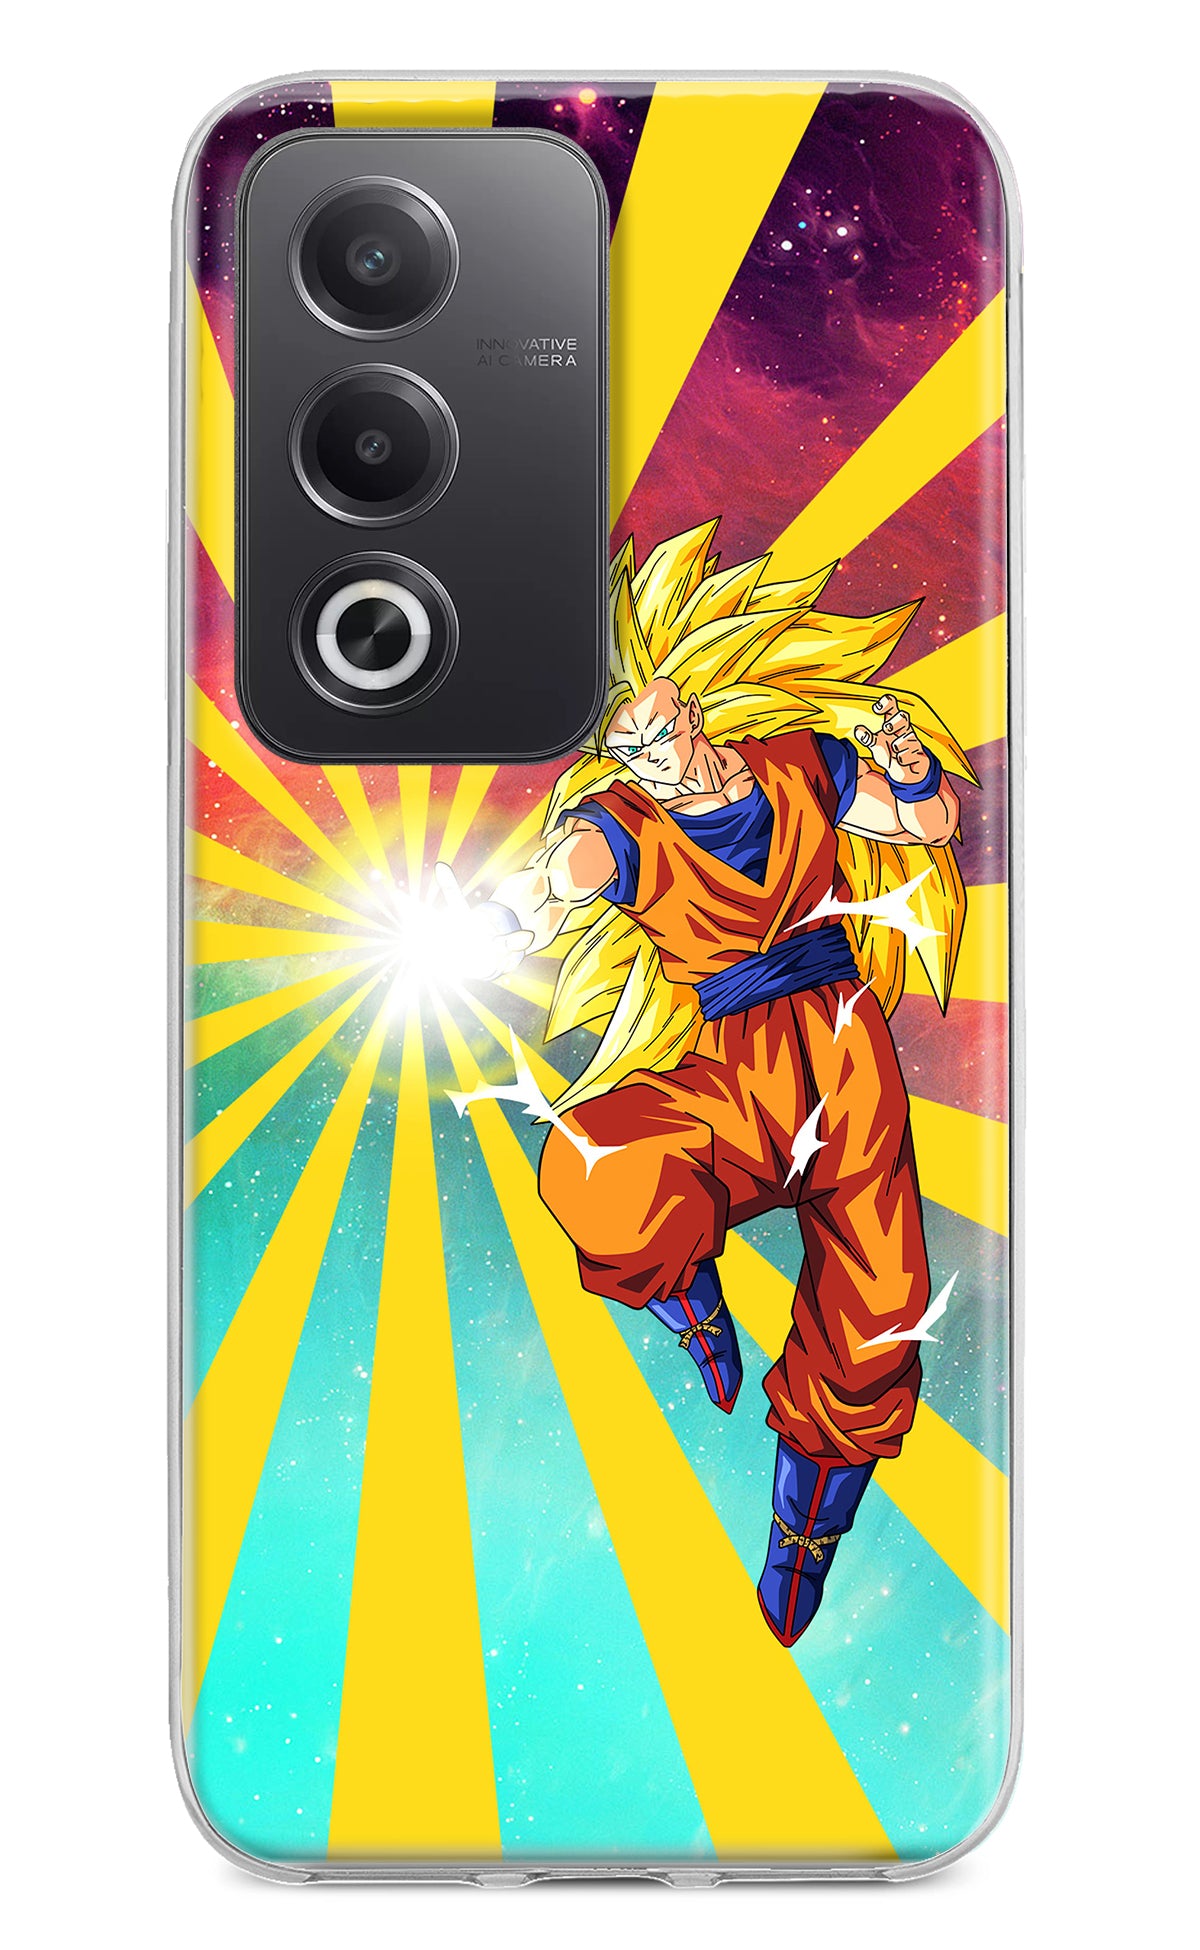 Goku Super Saiyan Oppo A3 Pro 5G Back Cover